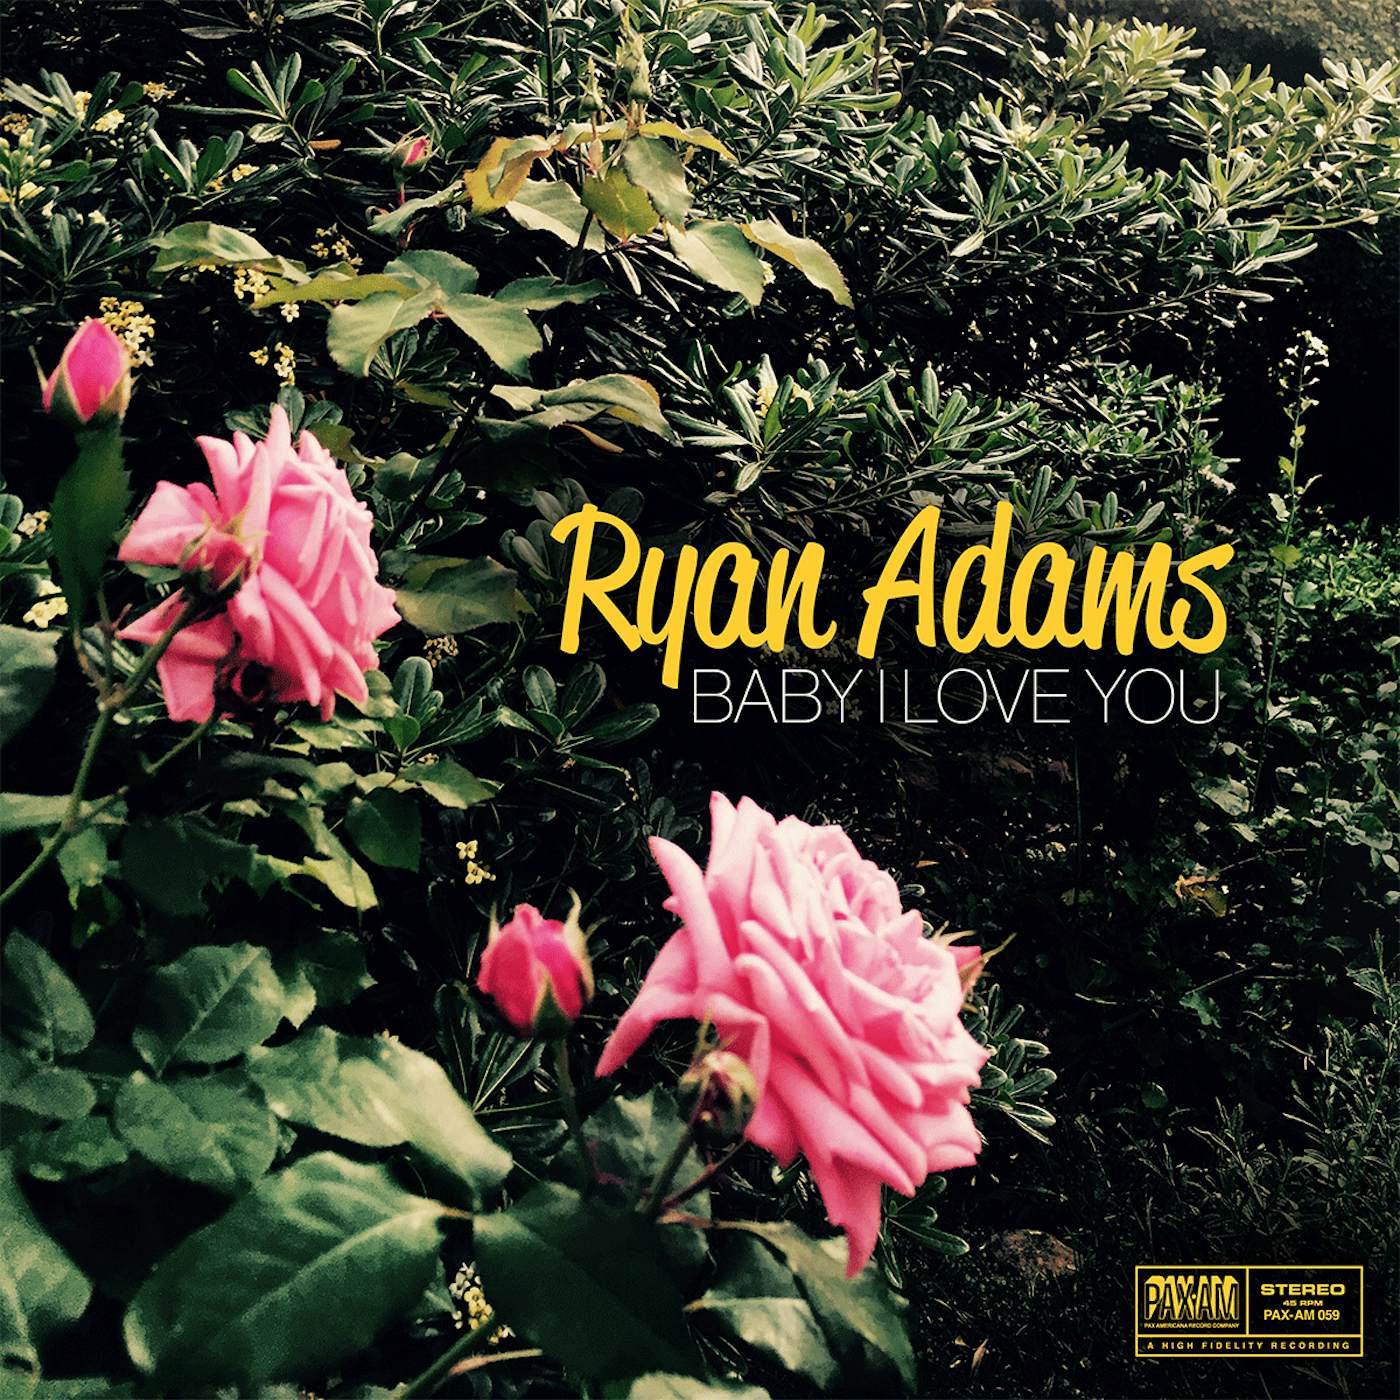 Ryan Adams Baby I Love You - Digital